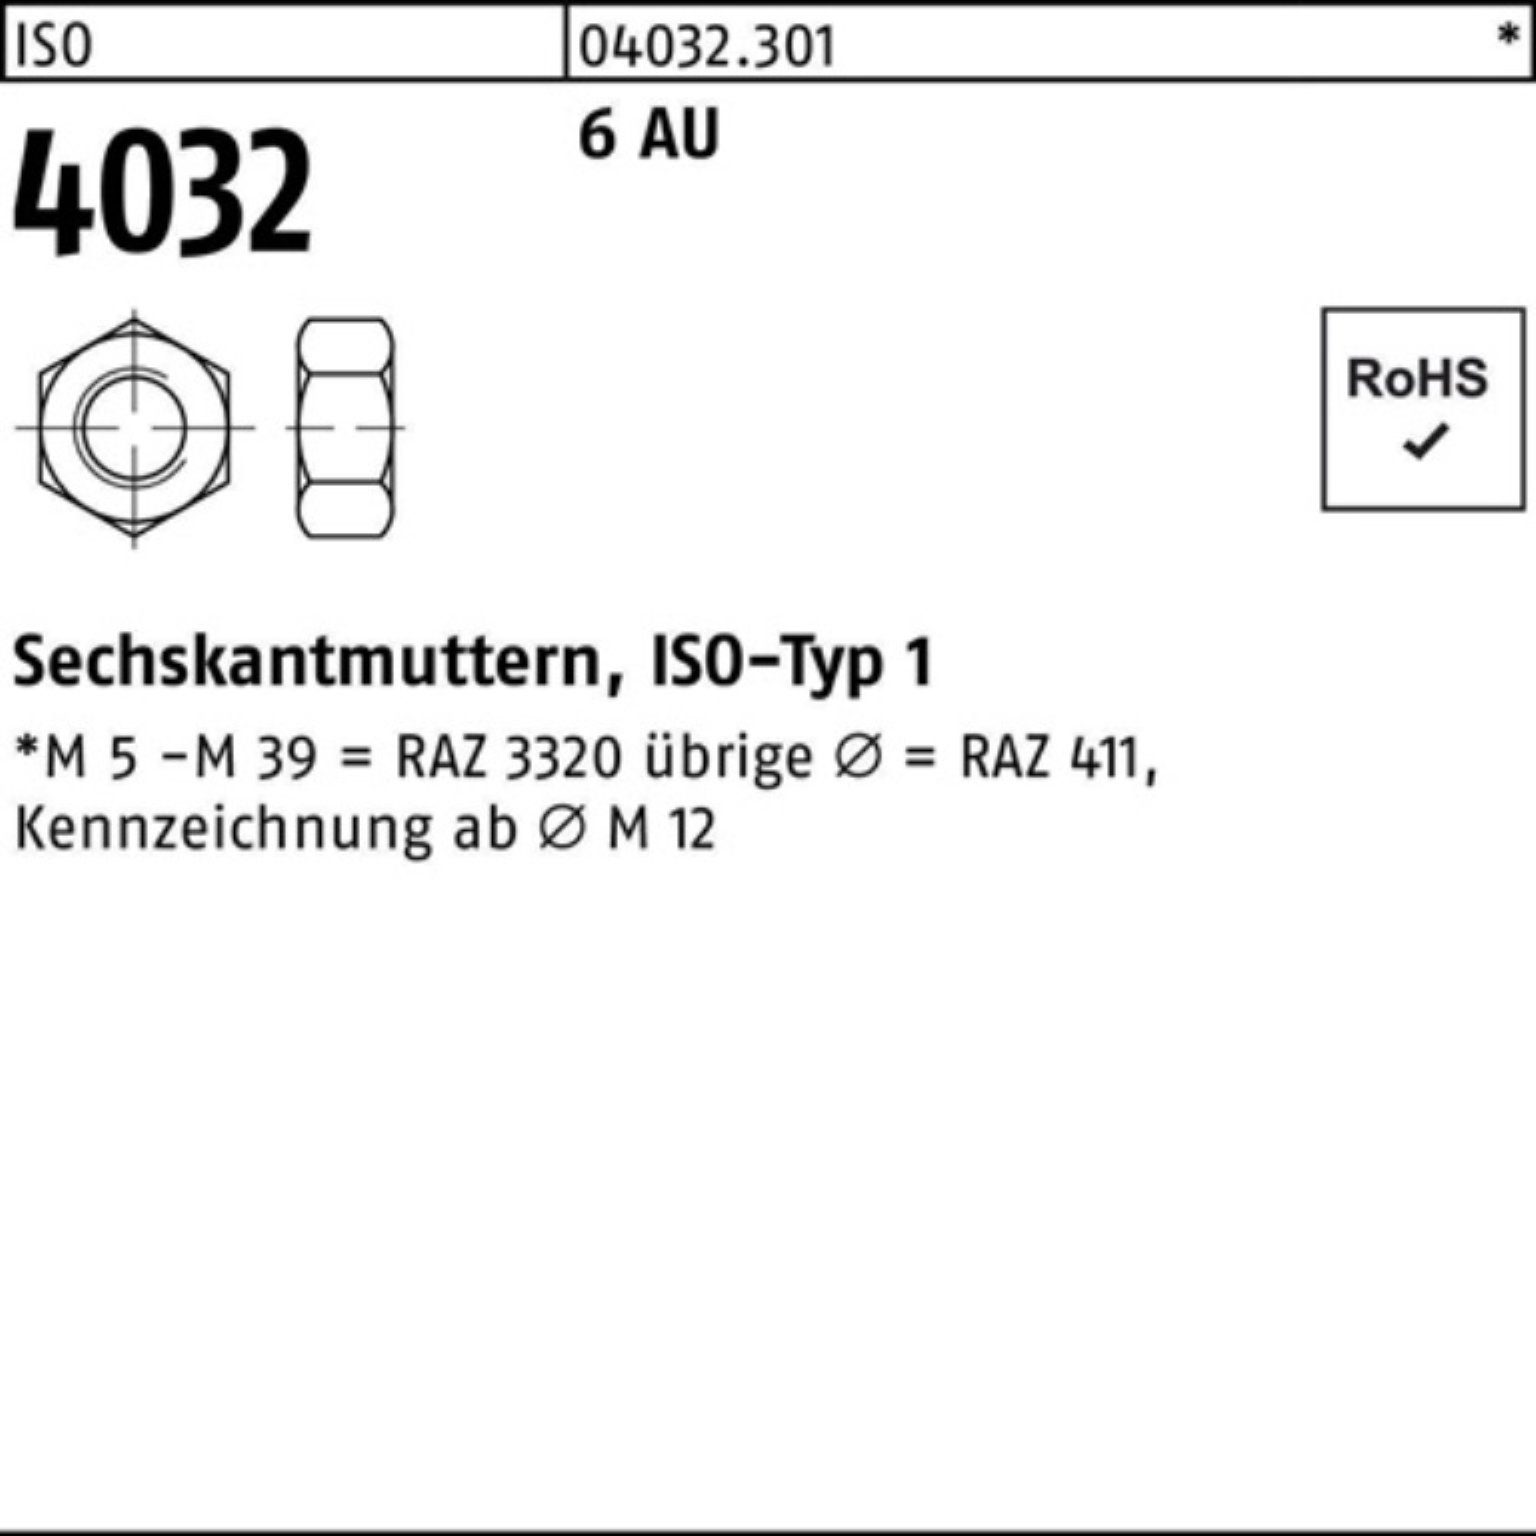 M4 Bufab Sechskantmutter Stück 4032 1000 I Pack 1000er 6 Automatenstahl Muttern ISO